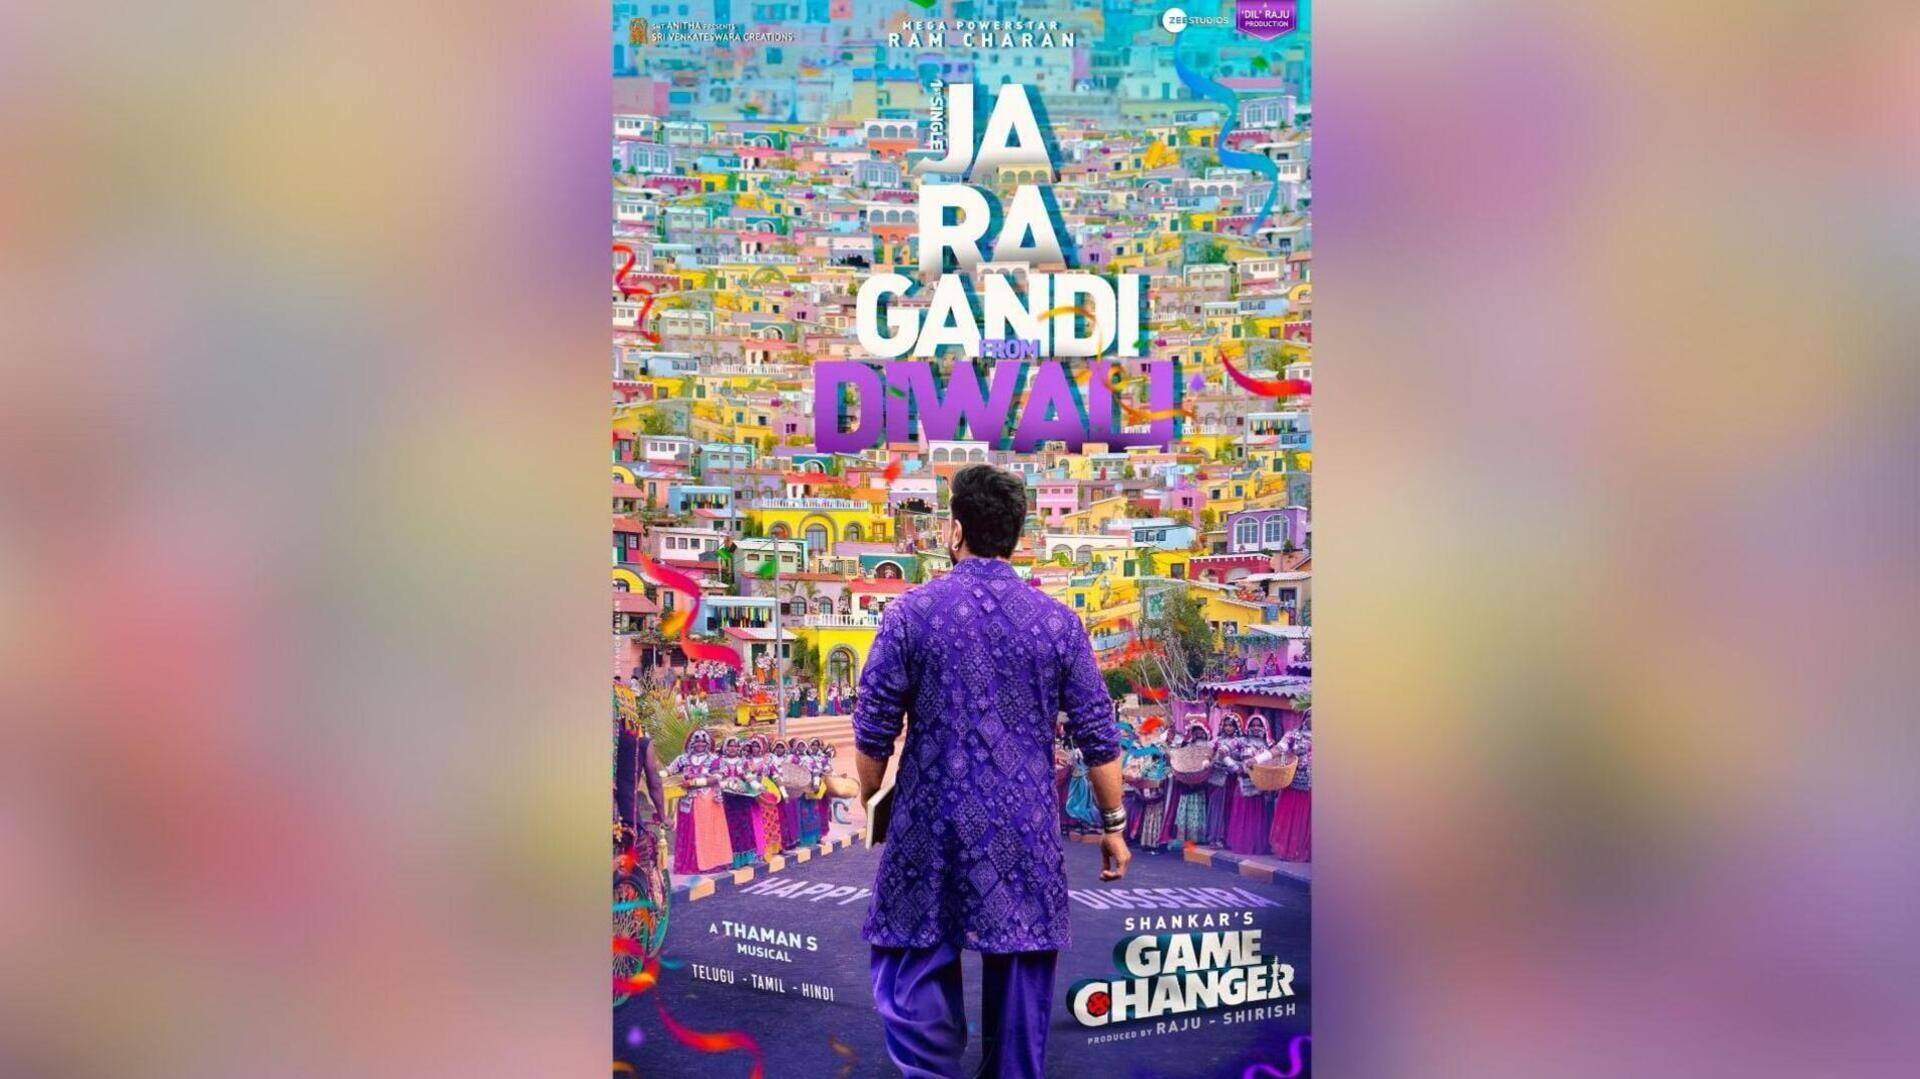 Ram Charan's 'Game Changer' song 'Jaragandi' faces postponement: Here's why